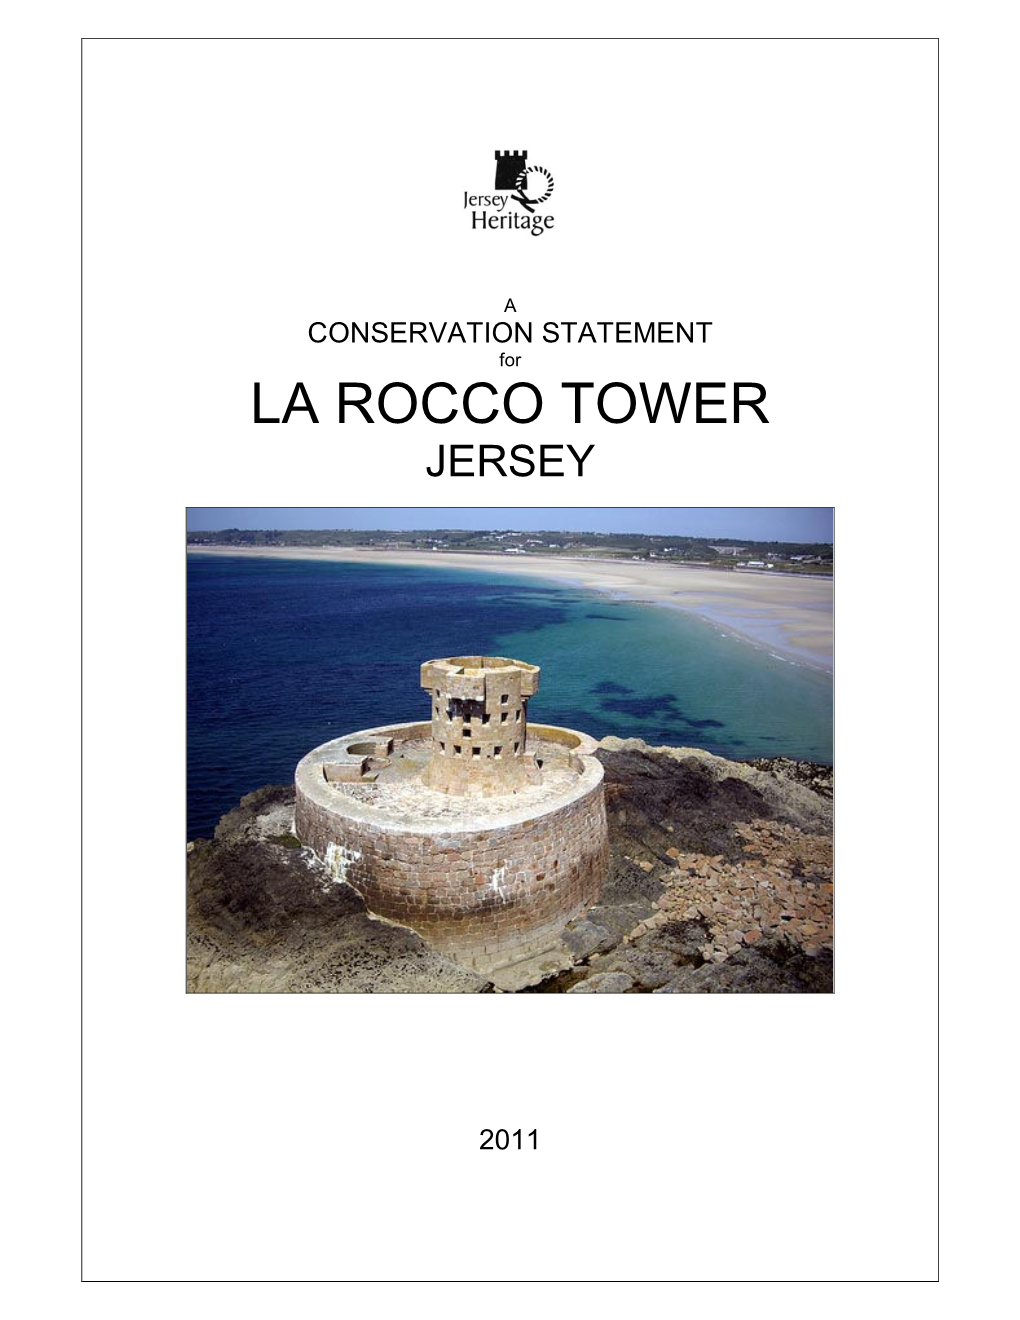 La Rocco Tower